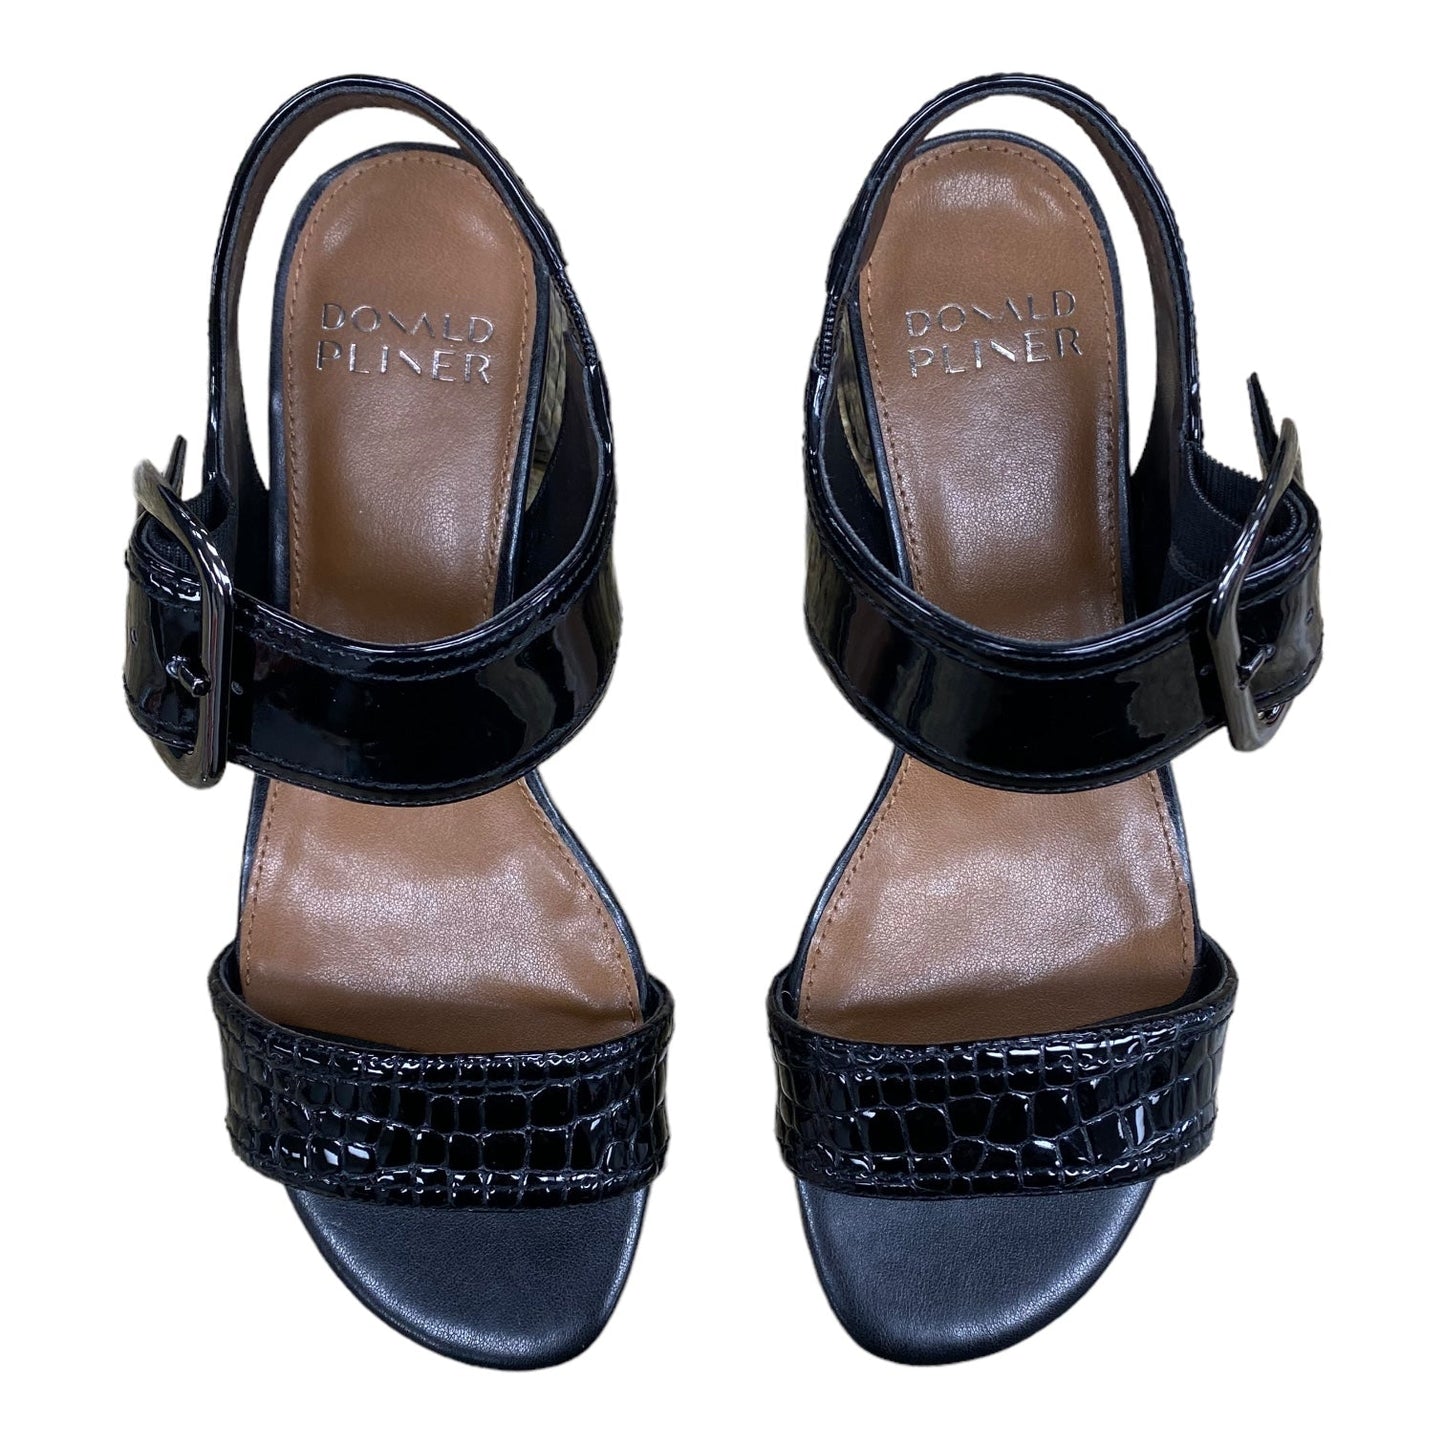 Shoes Heels Block By Donald Pliner  Size: 6